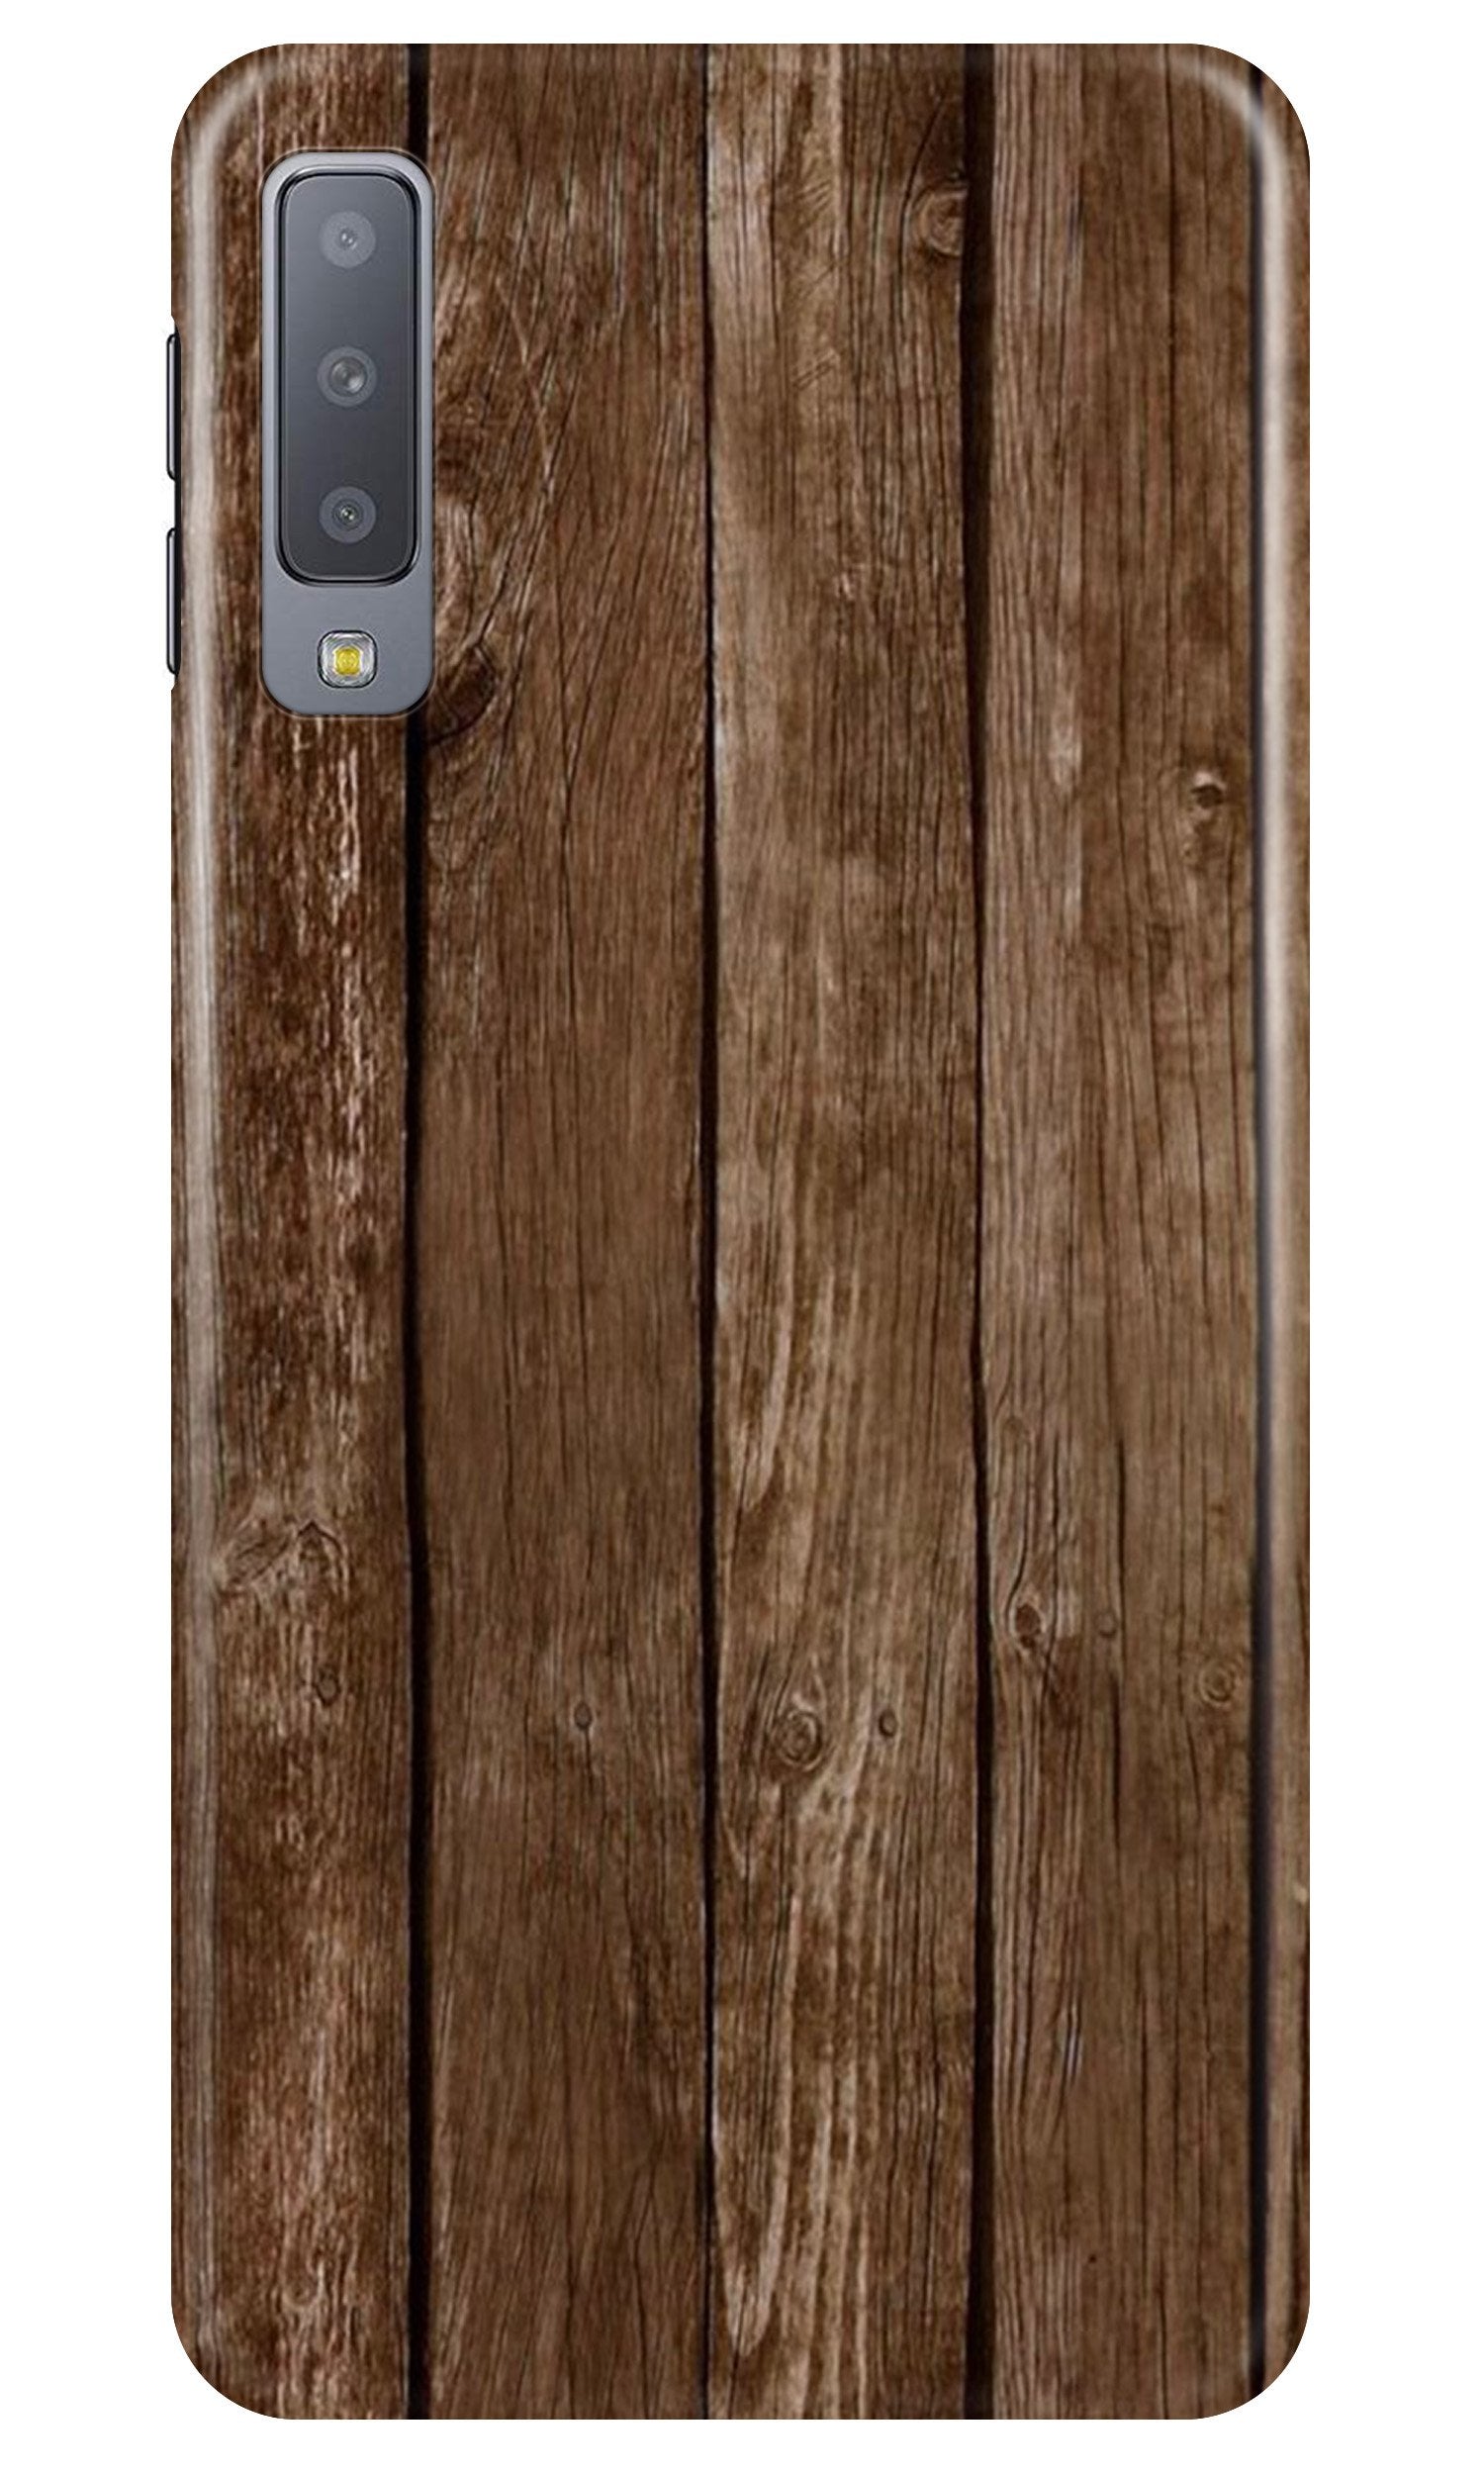 Wooden Look Case for Samung Galaxy A70s(Design - 112)